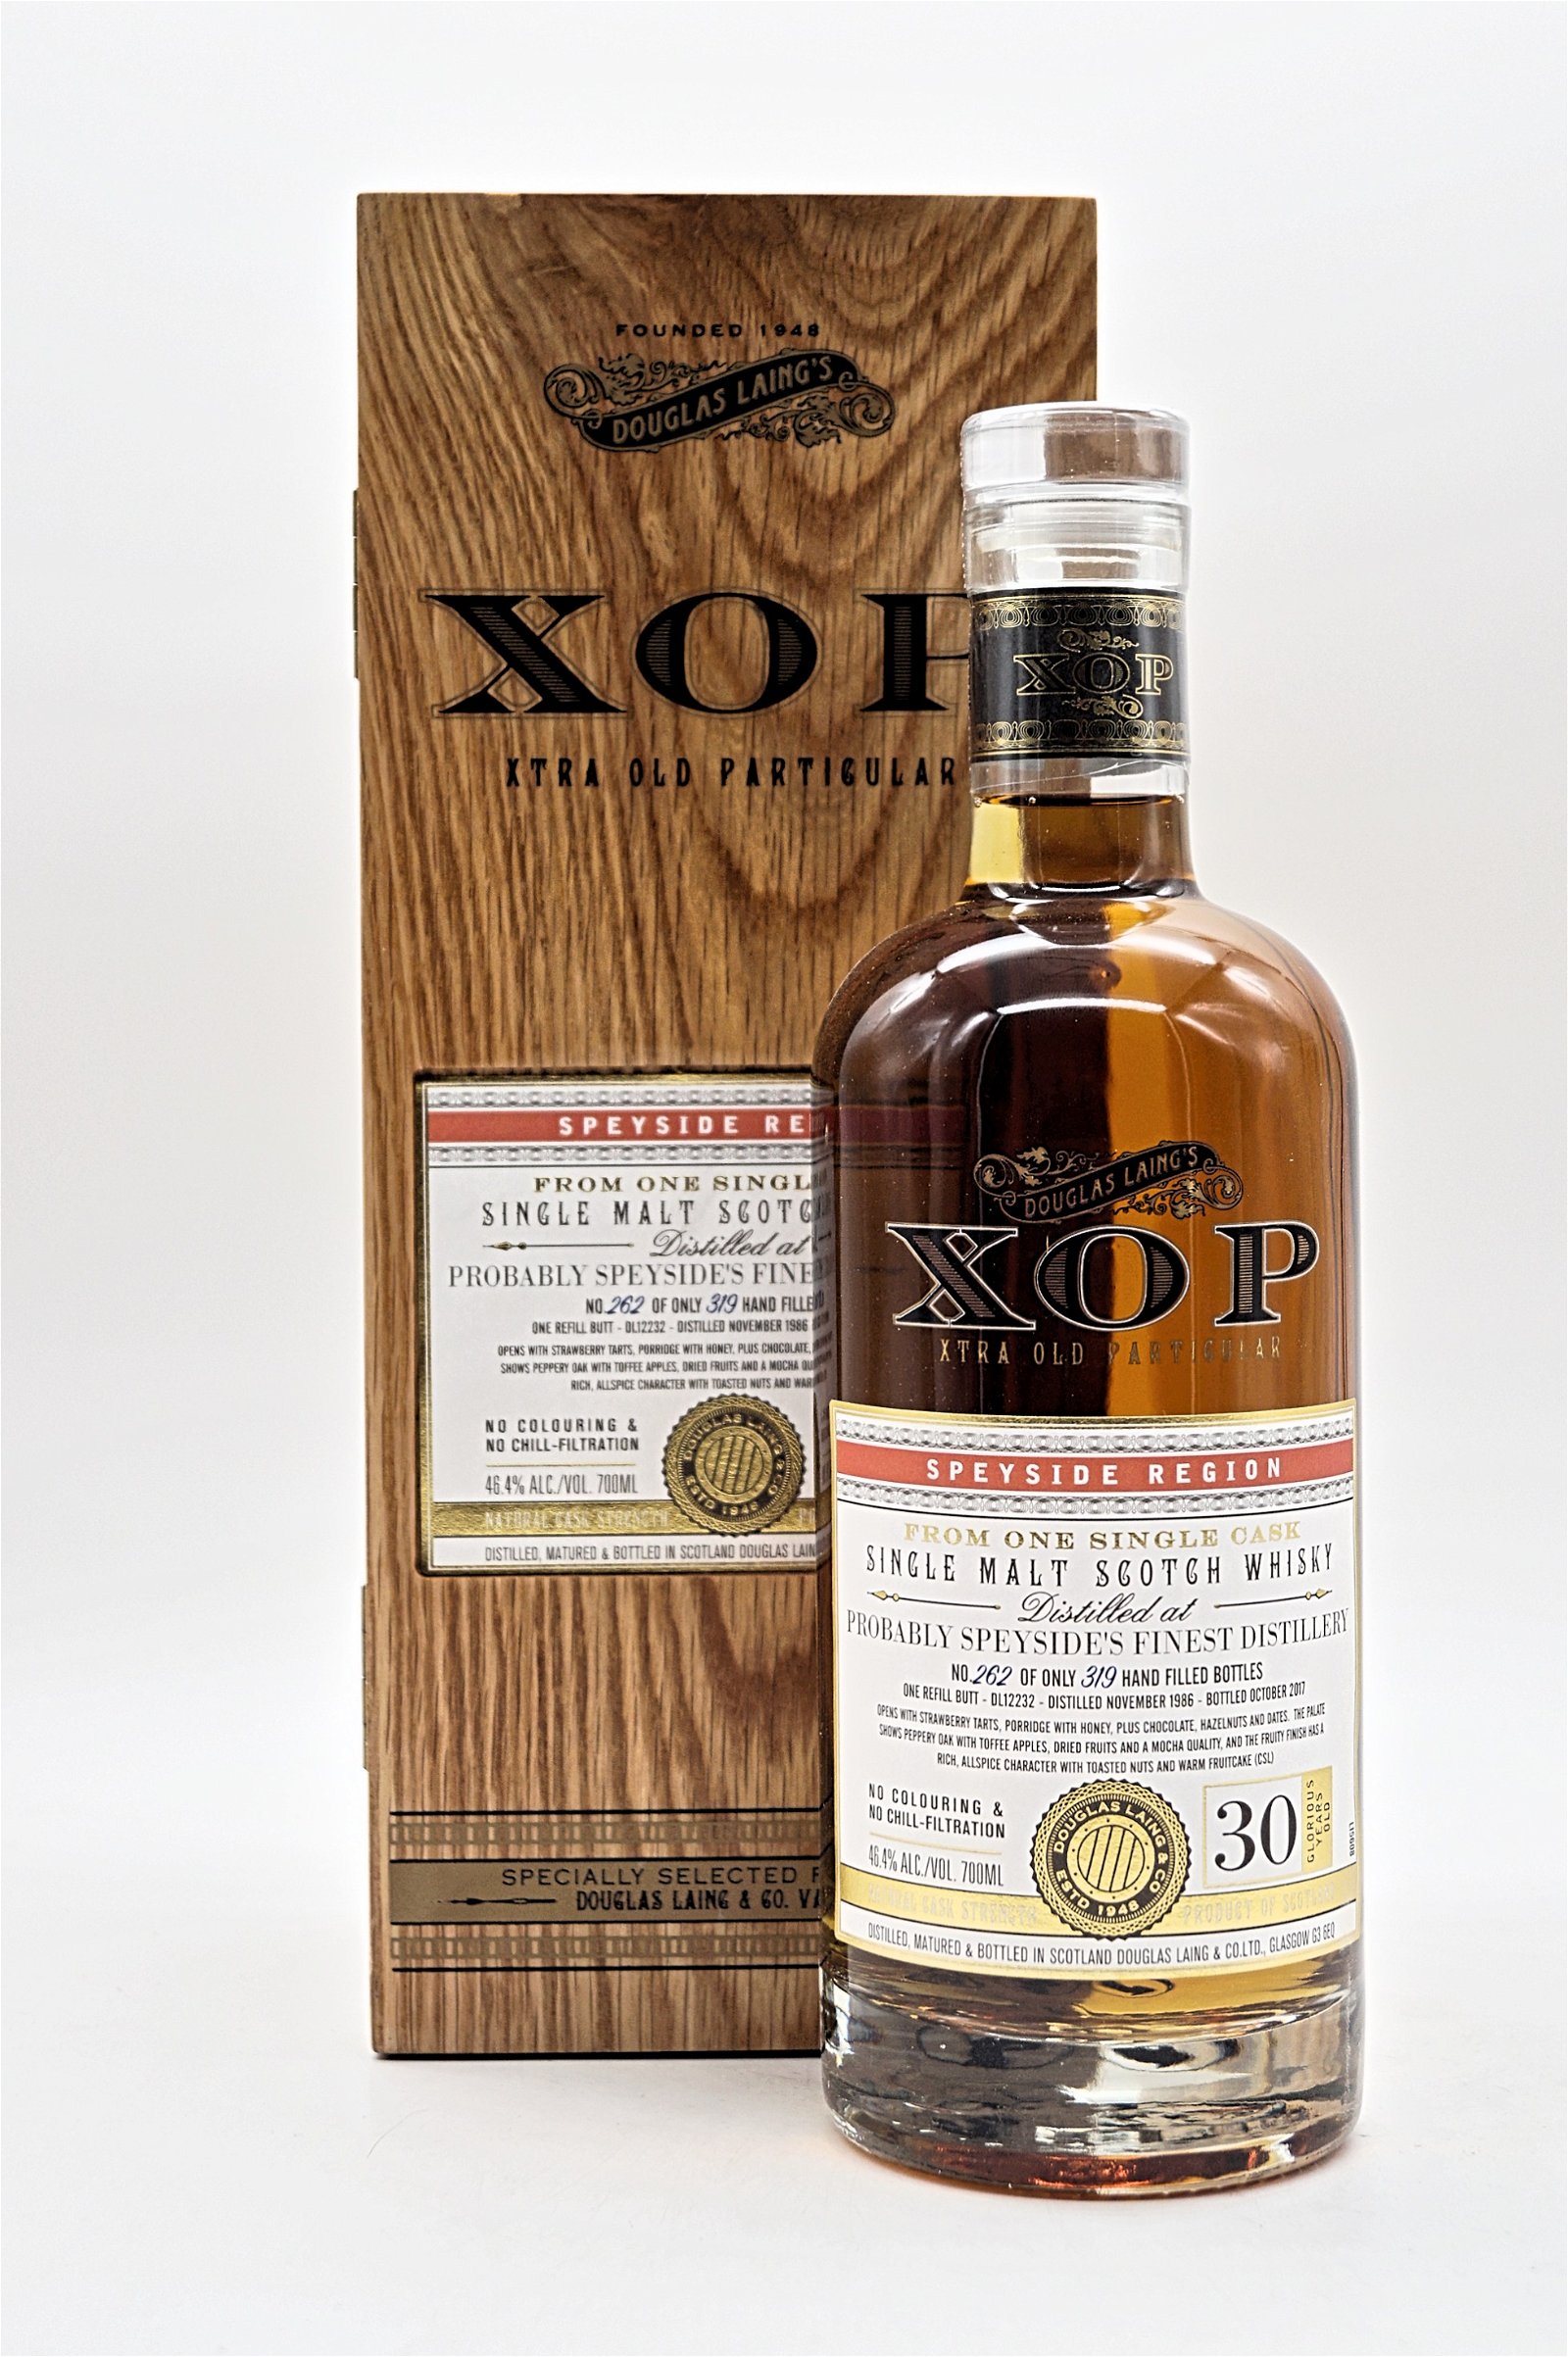 XOP Xtra Old Particular Probably Speysides Finest Distillery 30 Jahre 1986/2017 Flasche No. 262/319 Single Cask Single Mals Scotch Whisky 